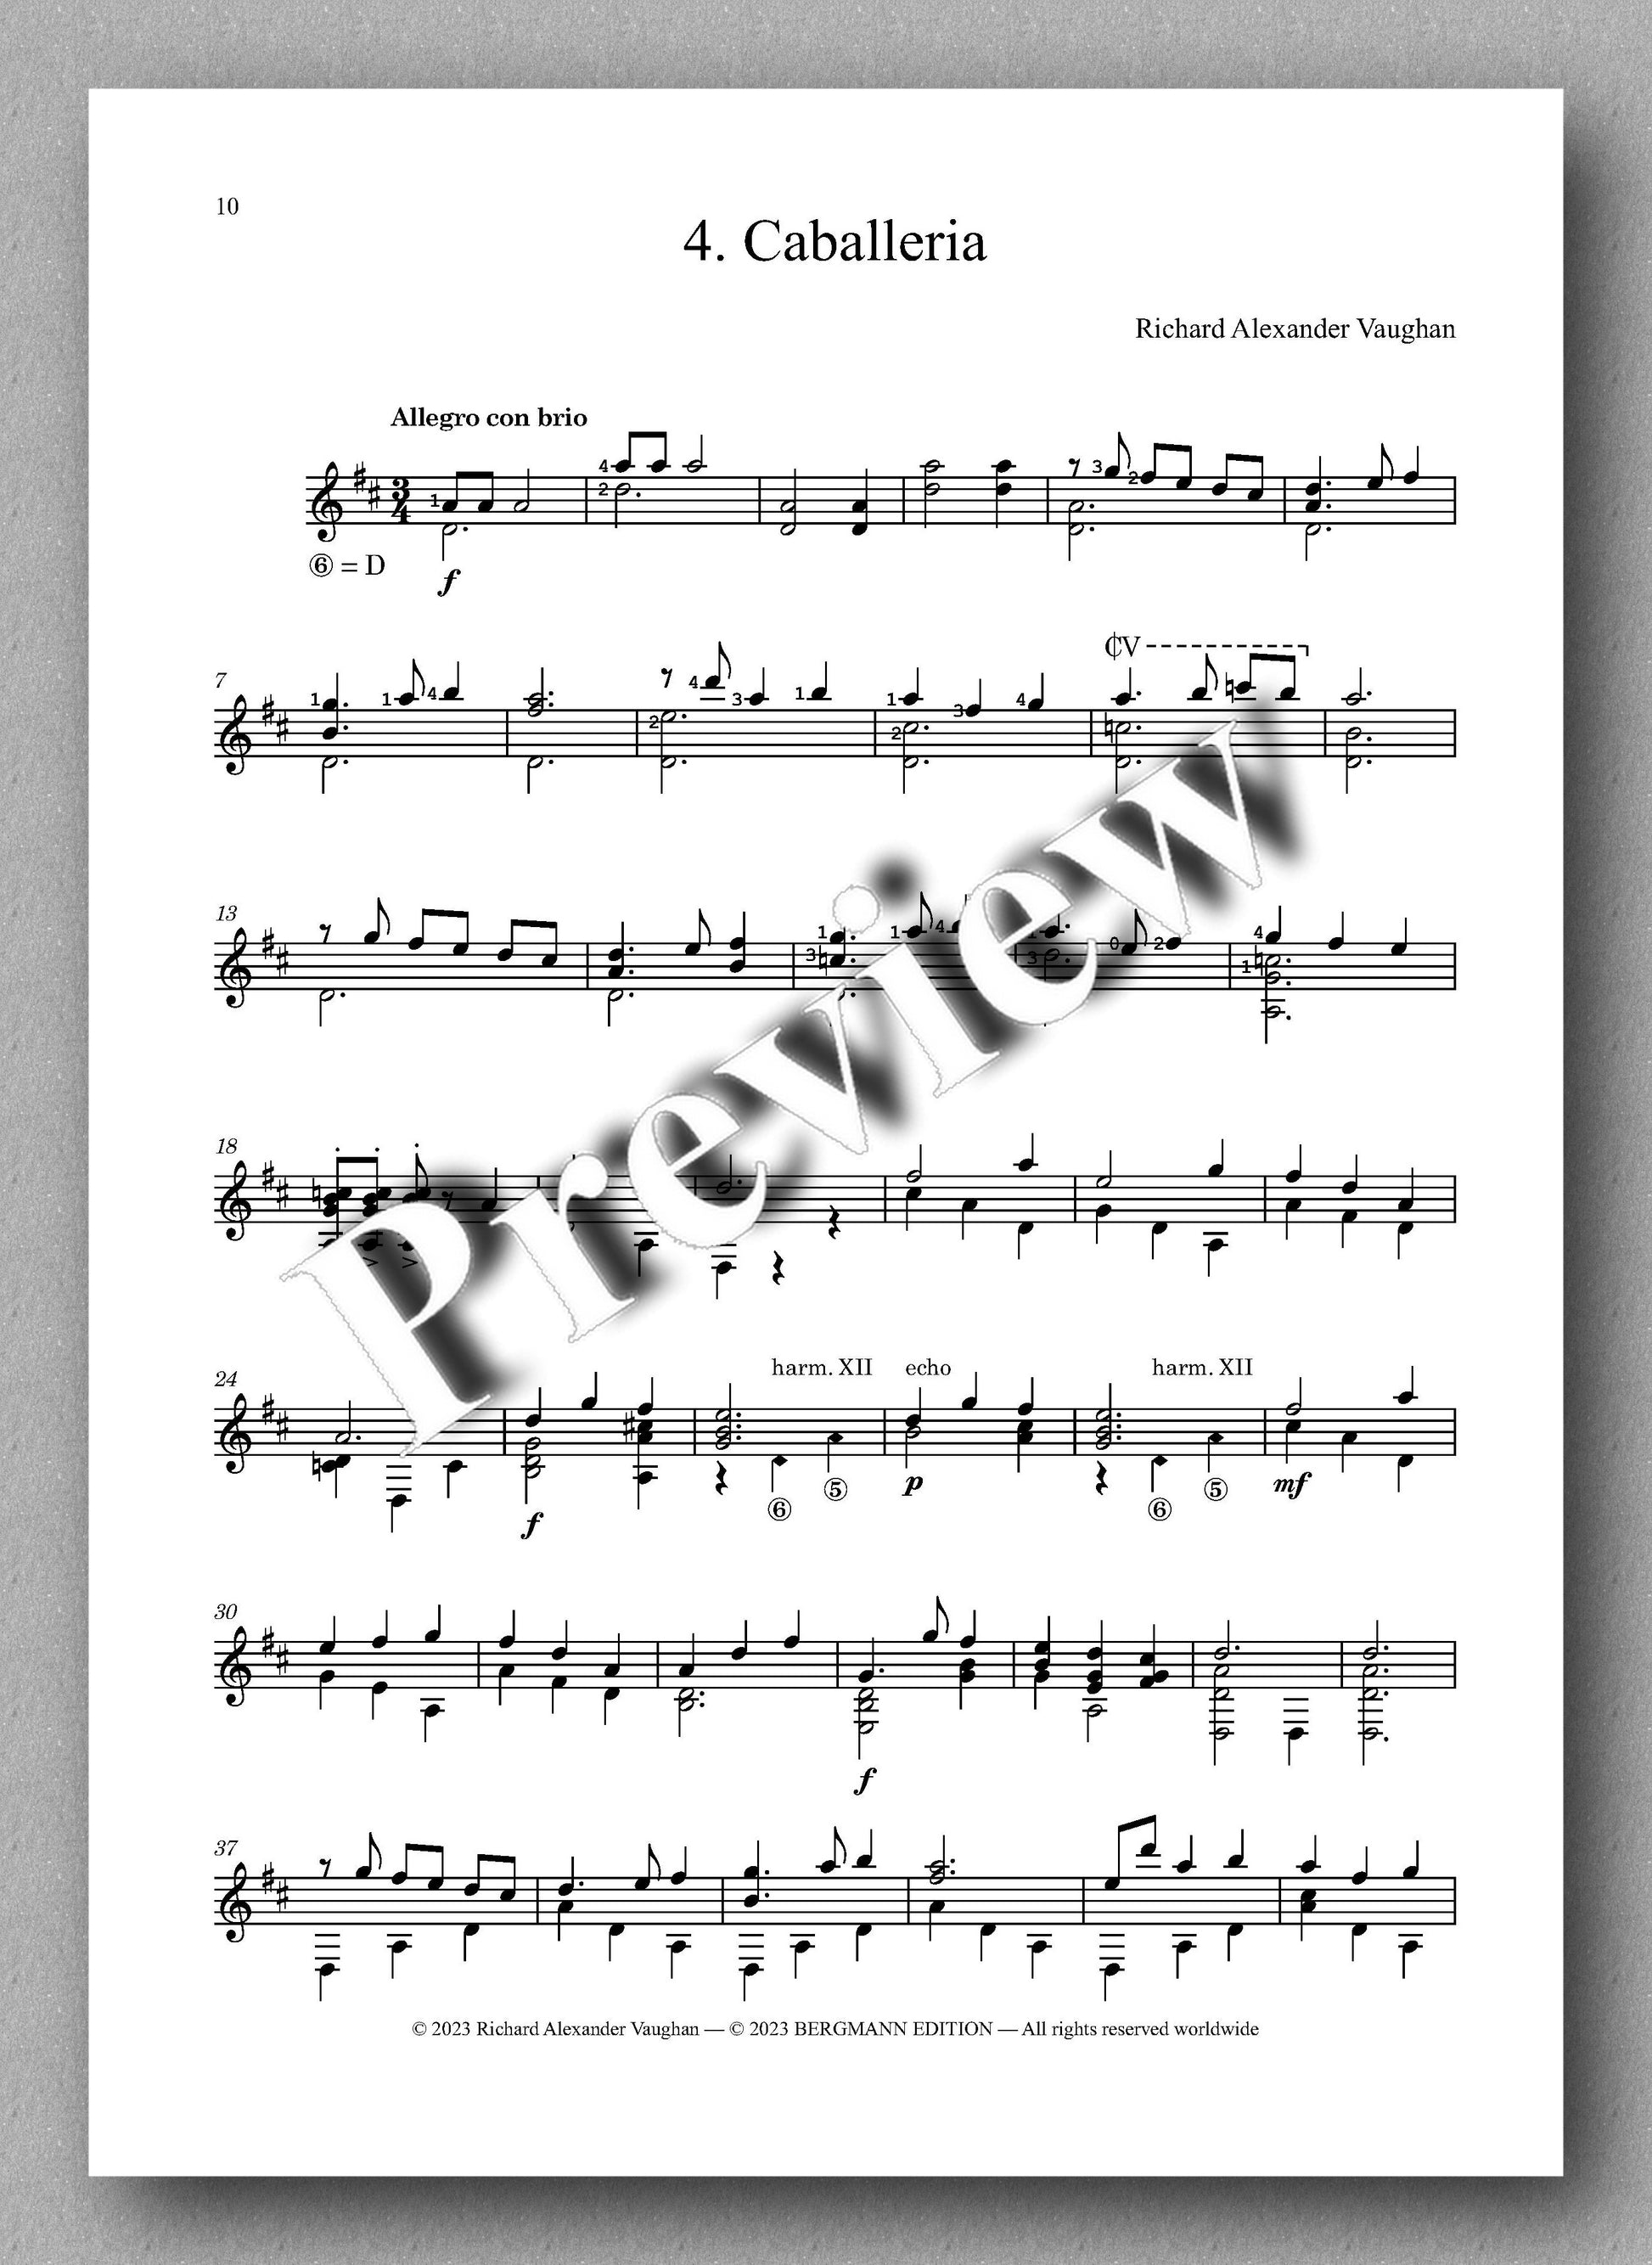 Richard Alexander Vaughan, Xixona Turrón - preview of the music score 3